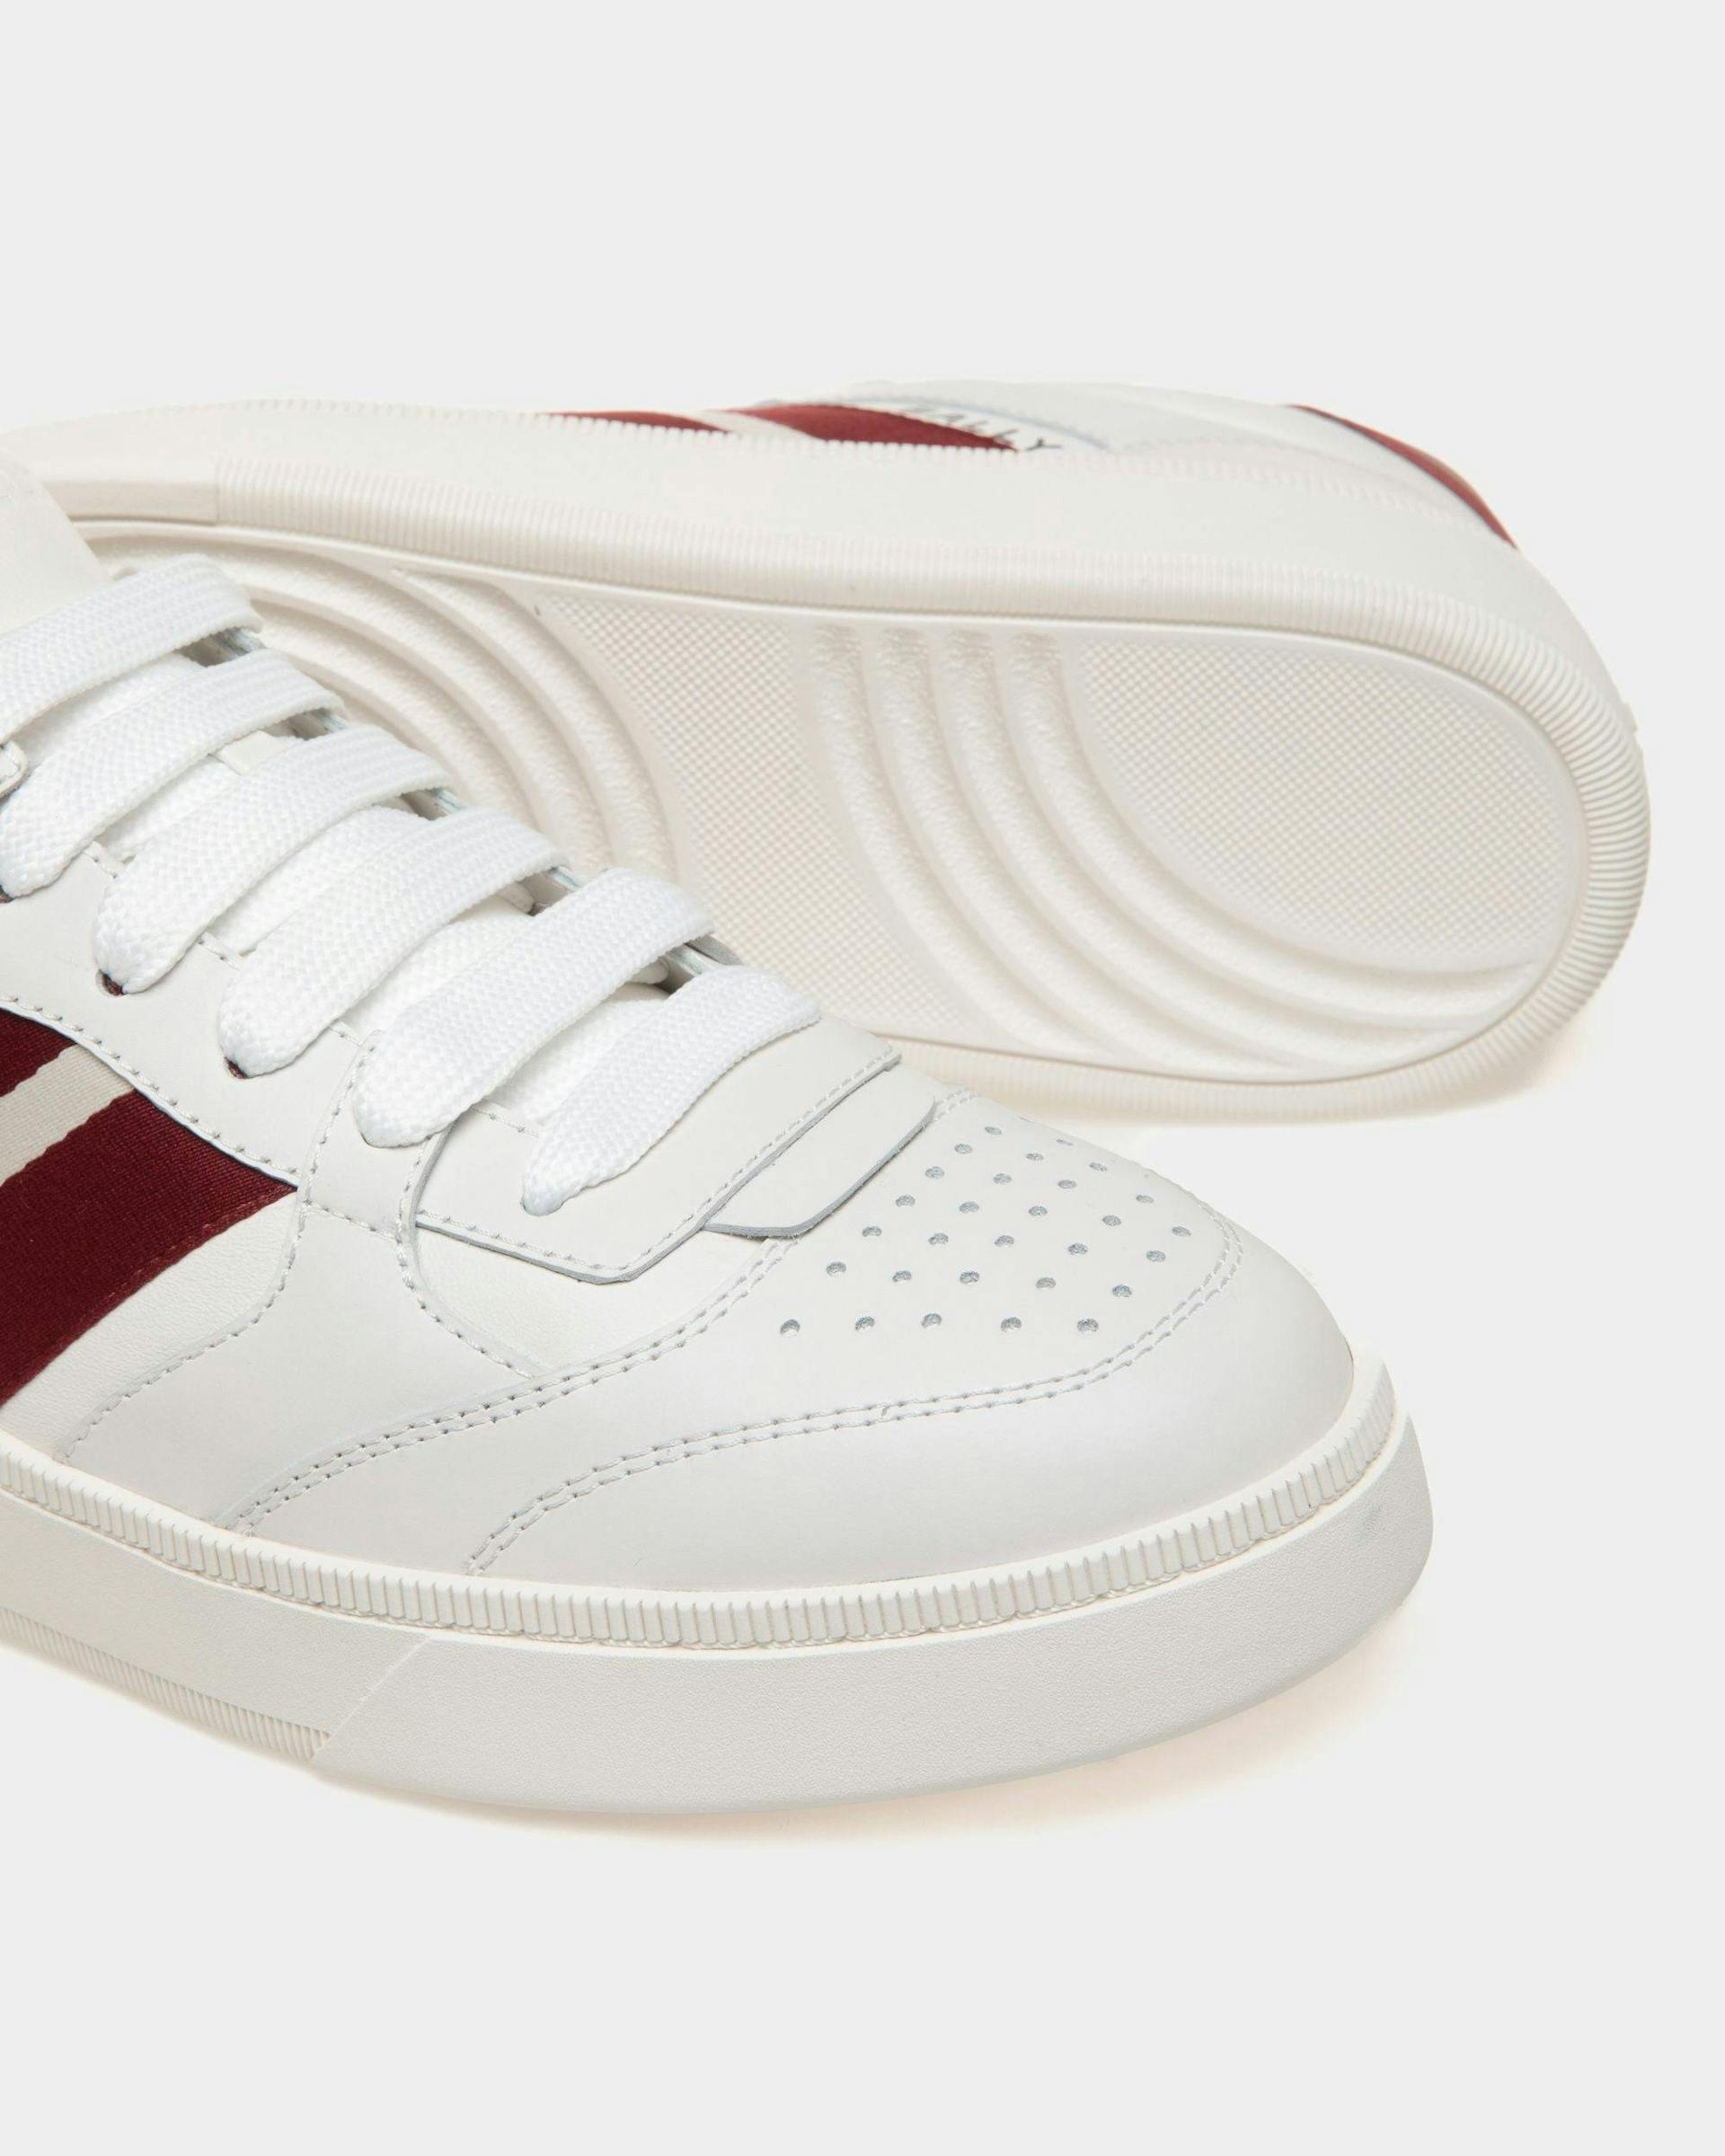 Men's Raise Sneaker In White Leather | Bally | Still Life Below